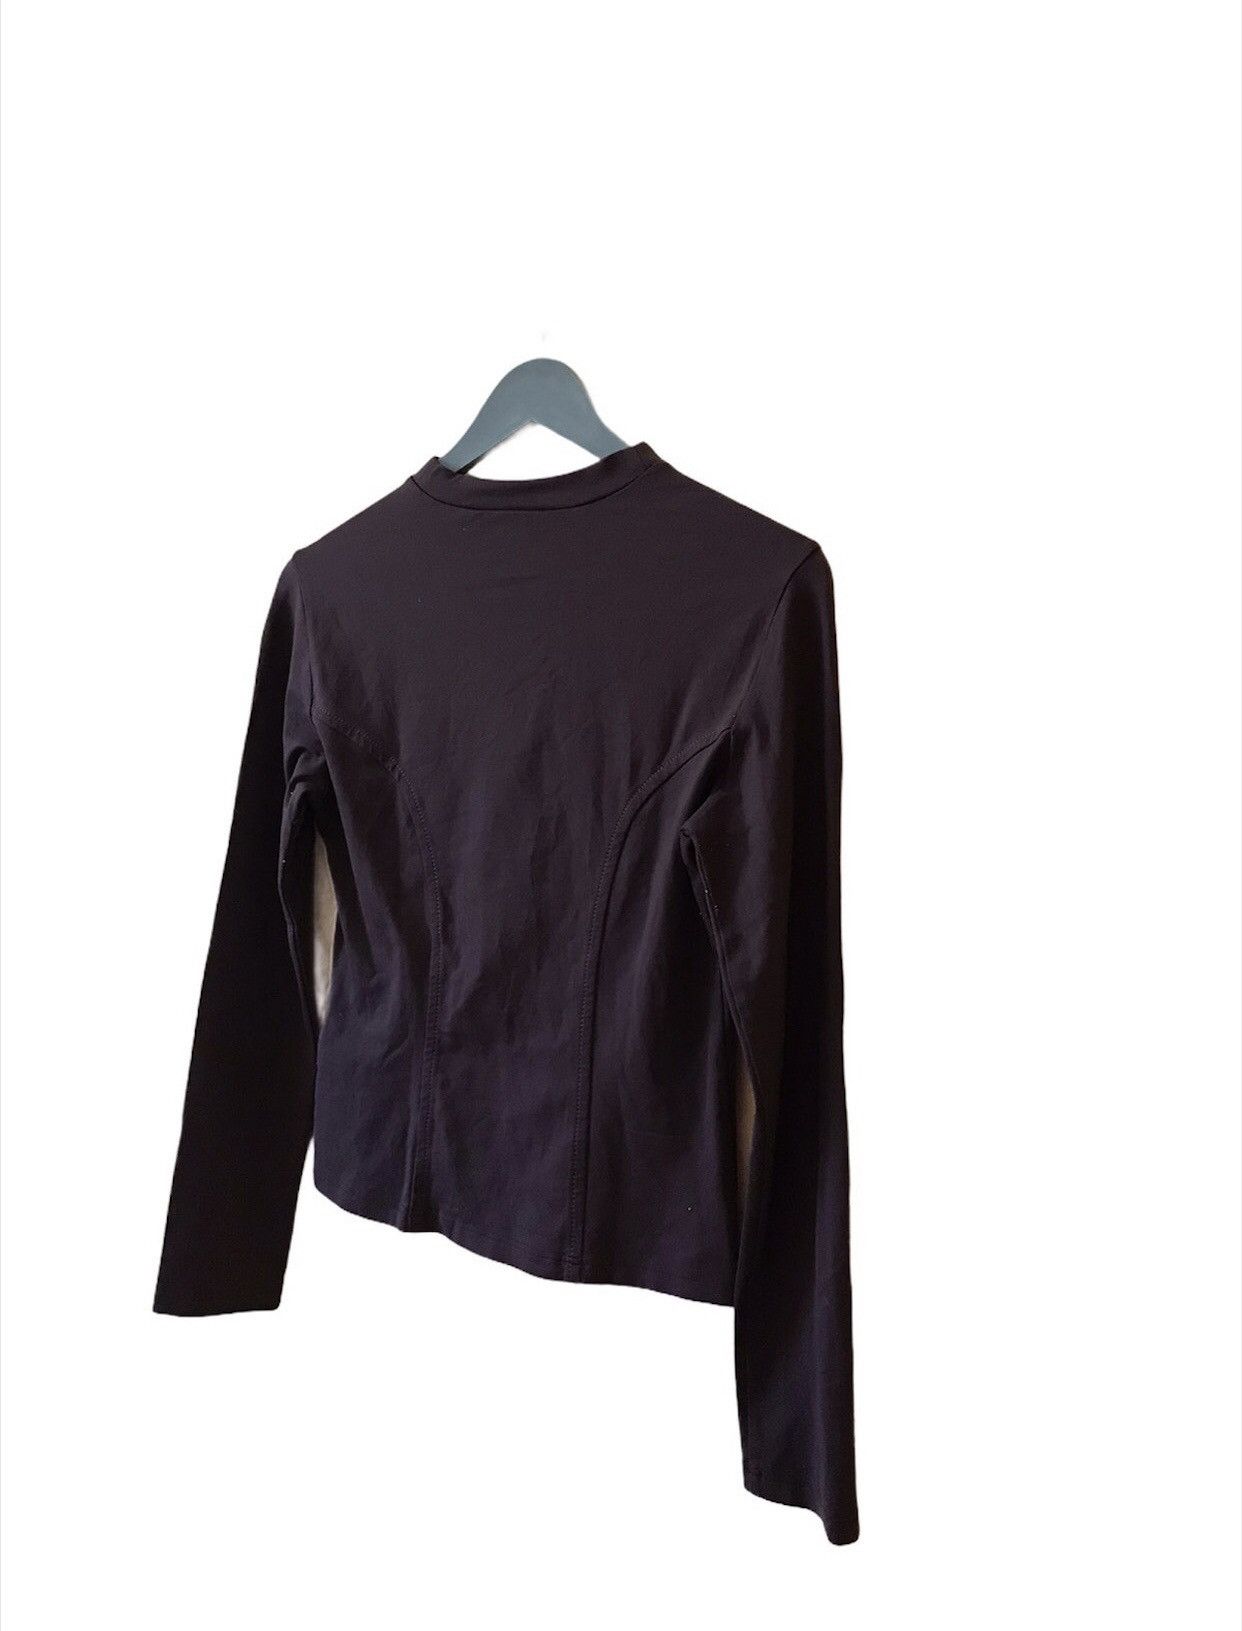 Fendi Fendi Small Logo V-Neck Long Sleeve Tee Size M / US 6-8 / IT 42-44 - 10 Preview